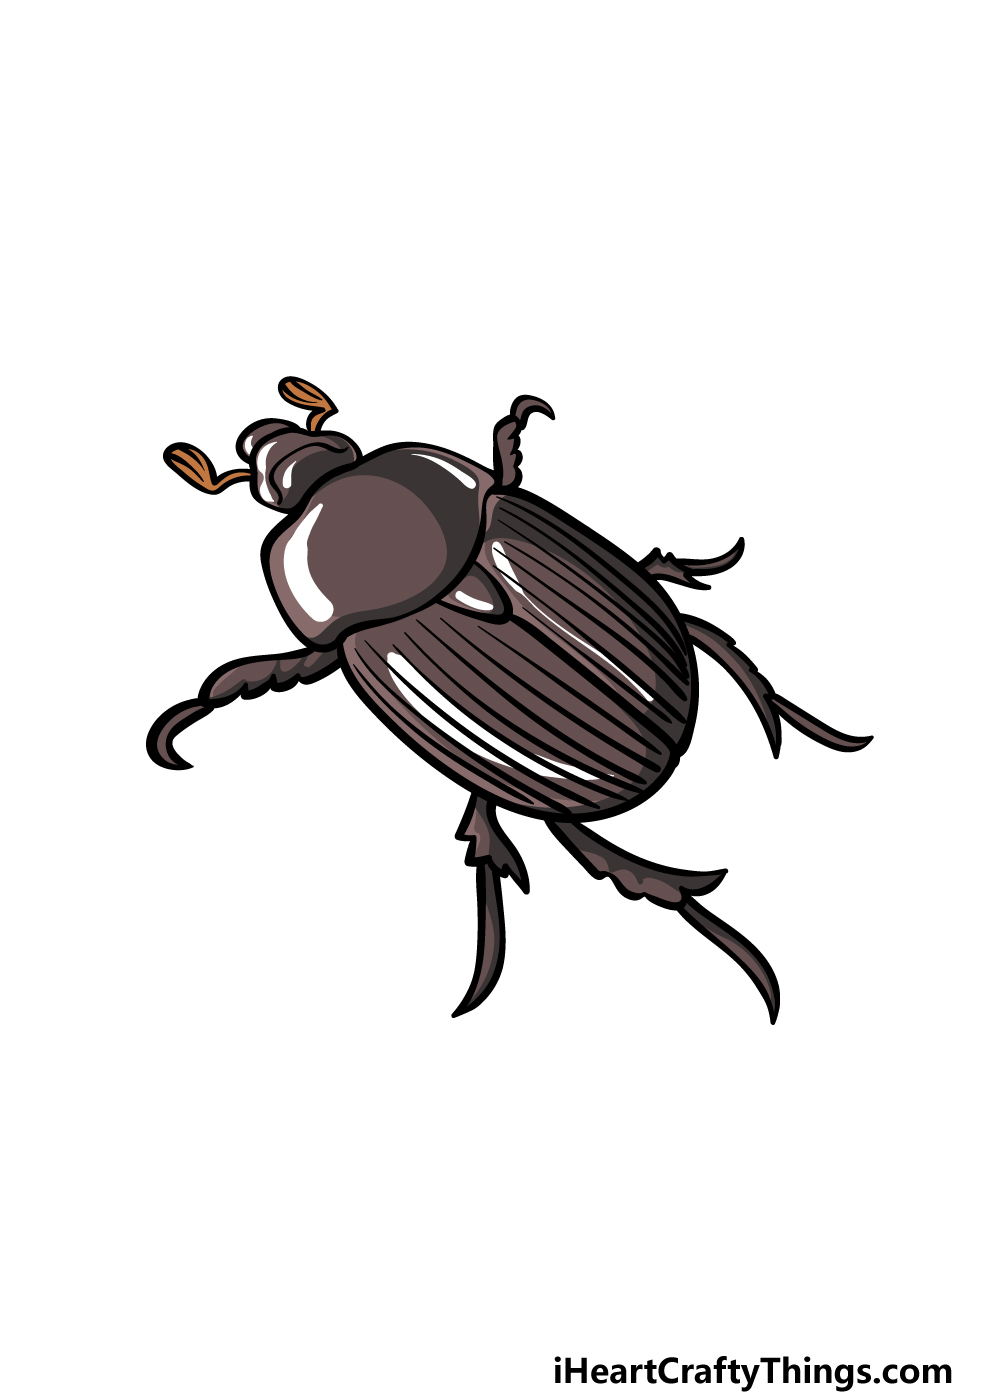 Beetle Drawing Realistic Sketch